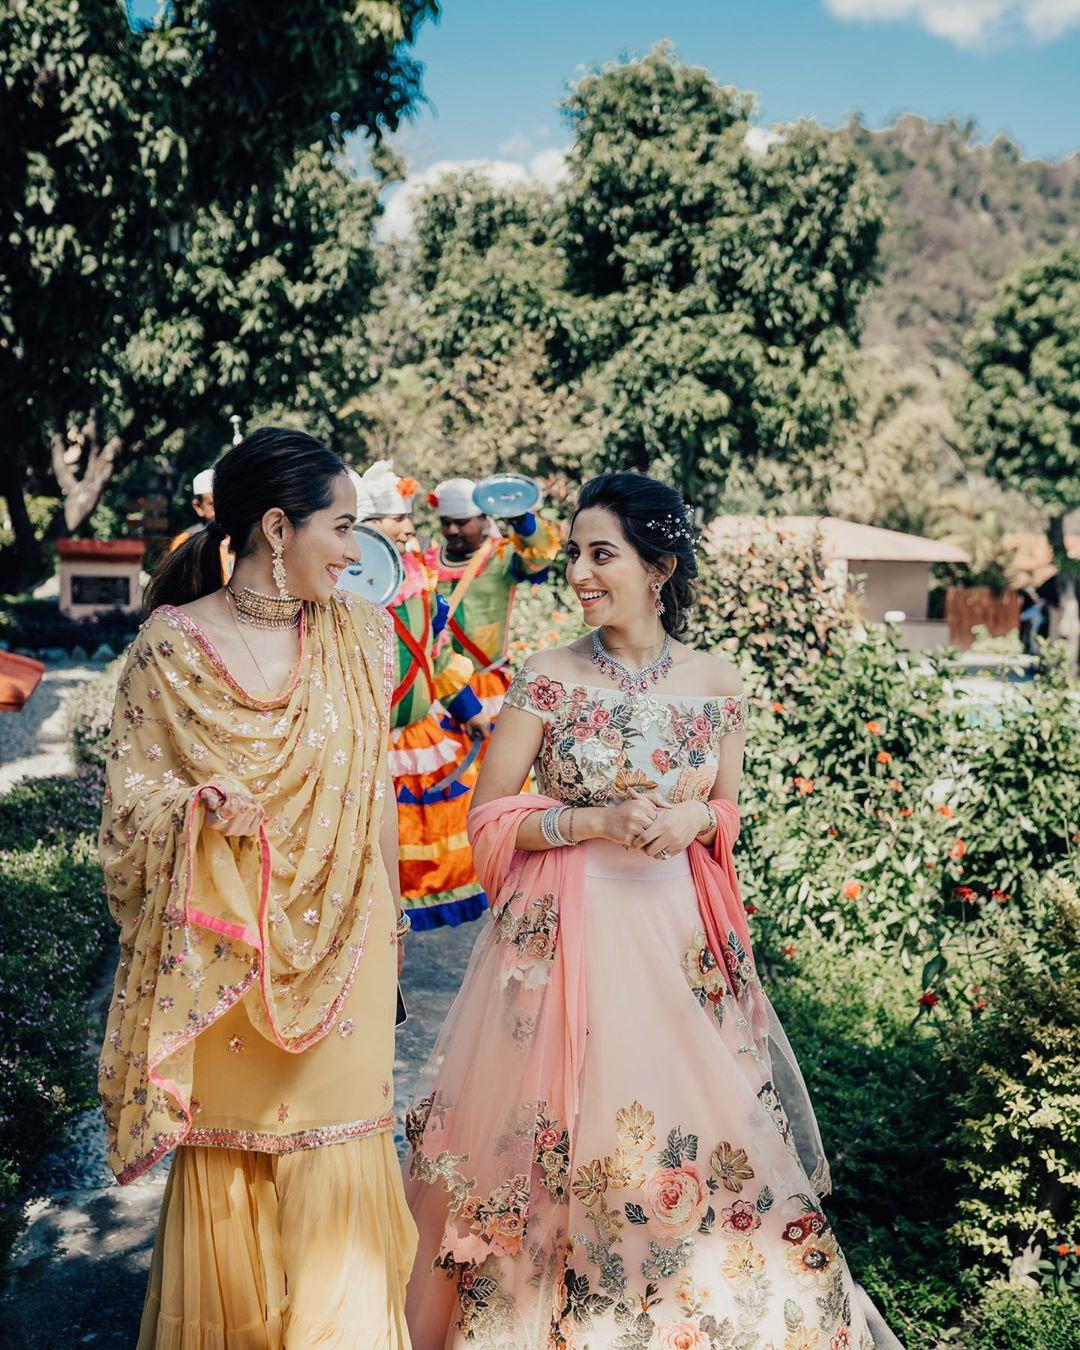 Sara Ali Khan Giving Some Major Outfit Ideas For This Wedding Season |  Sarara dress, Indian designer outfits, Indian fashion dresses